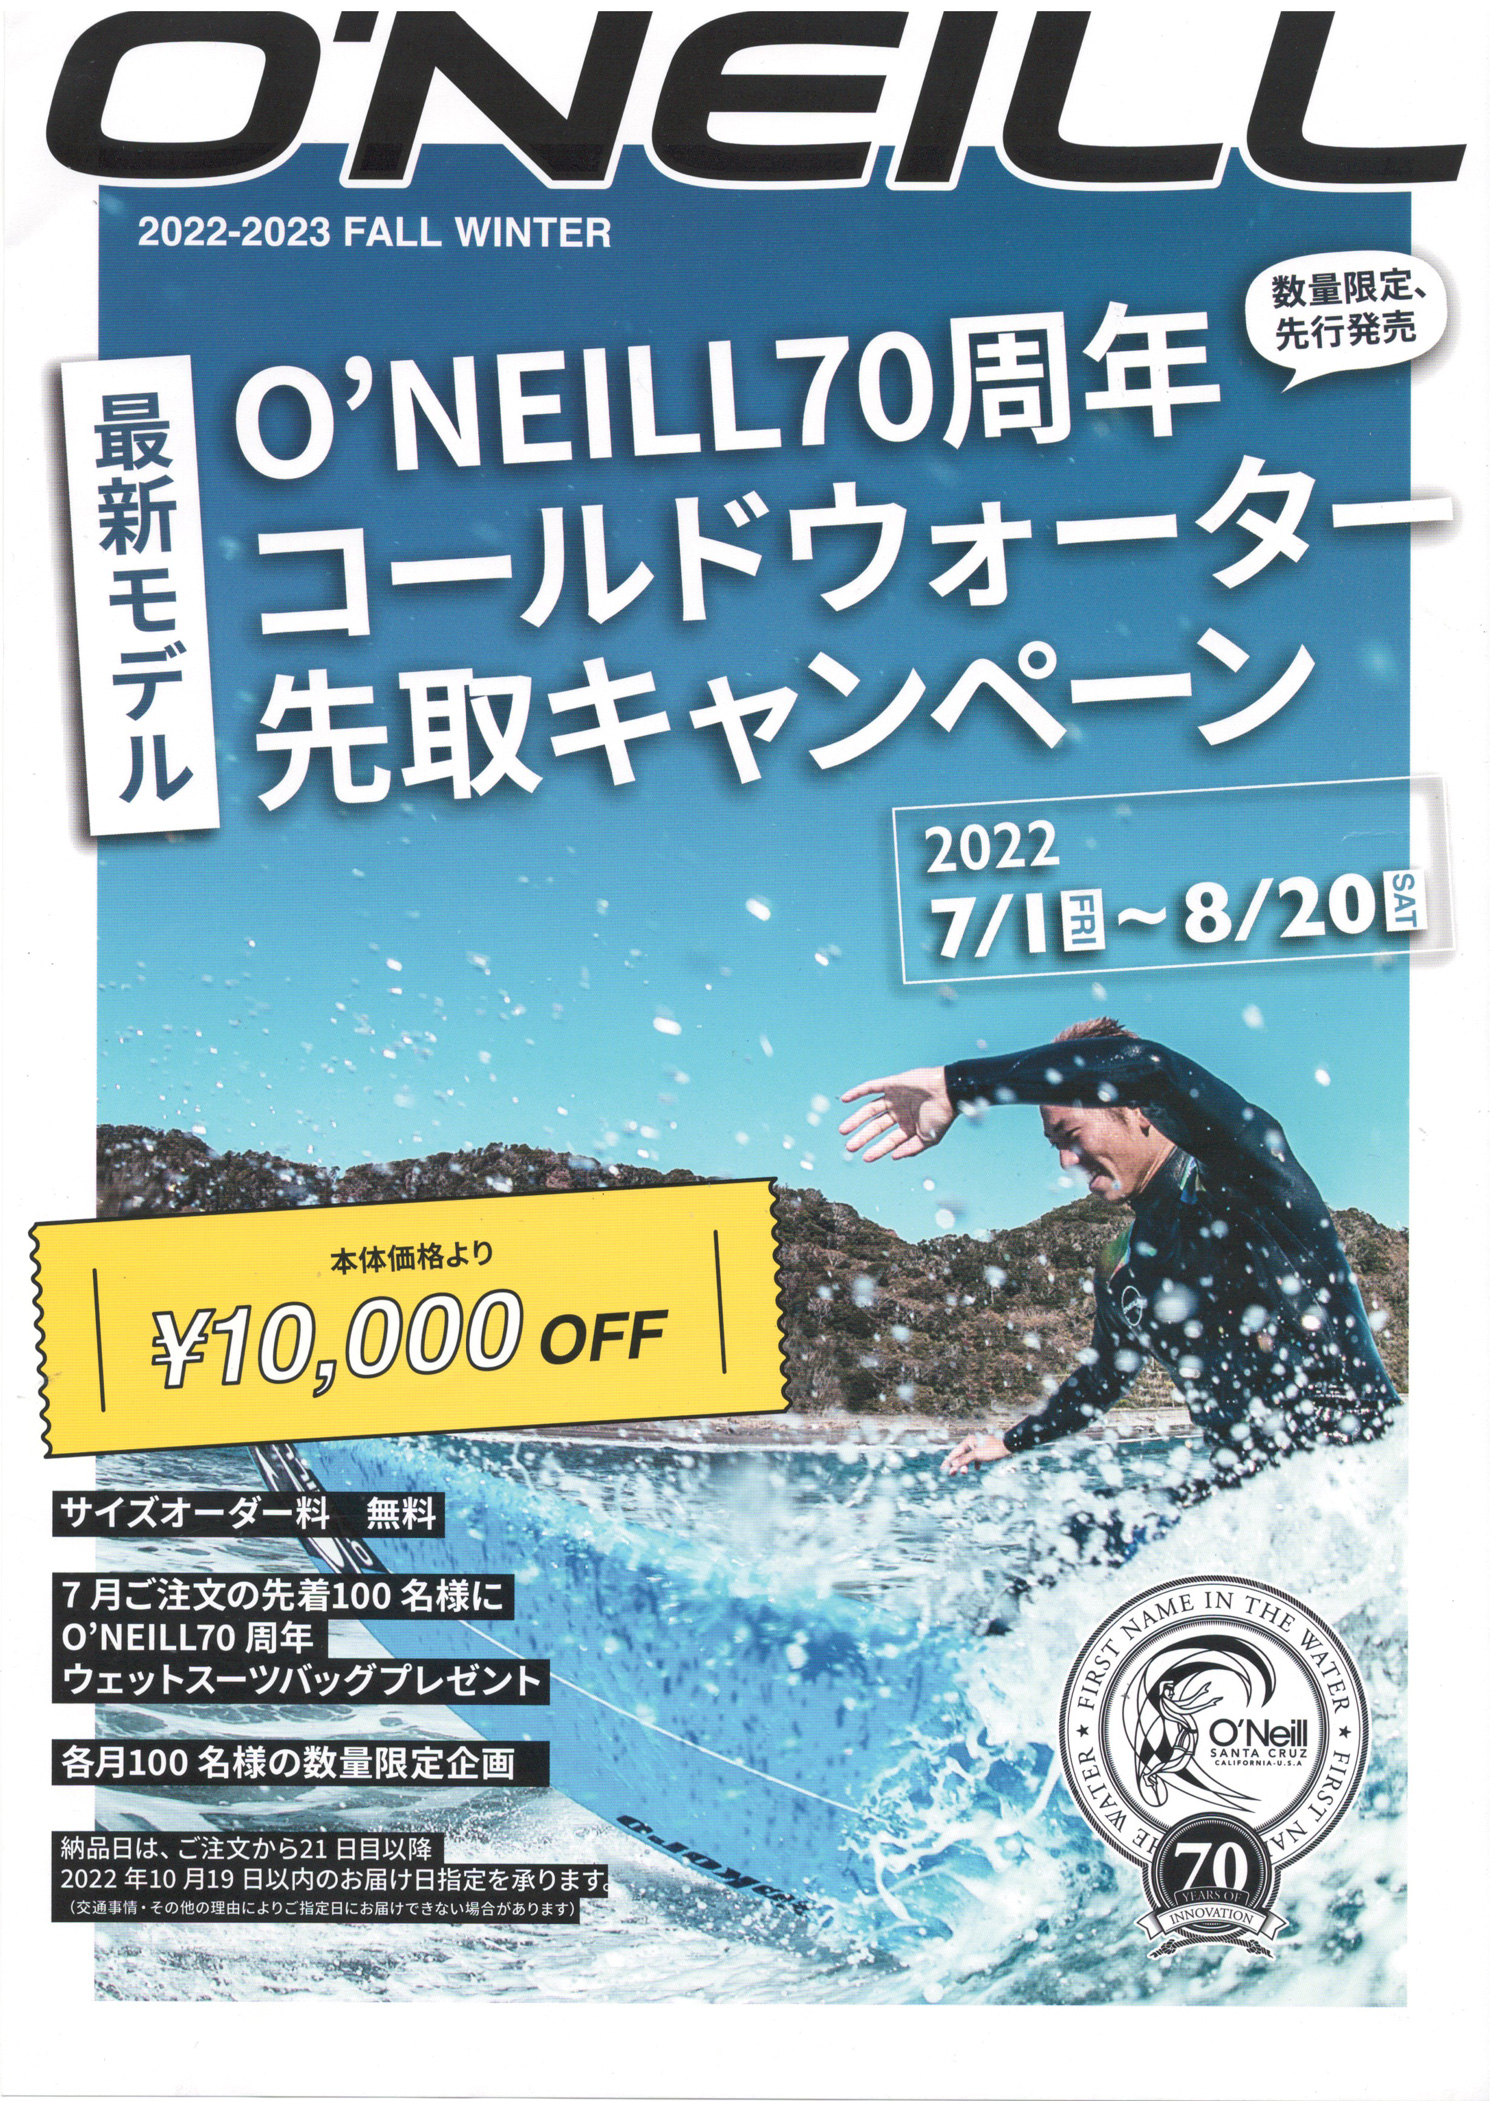 ONEILL 70周年キャンペーン